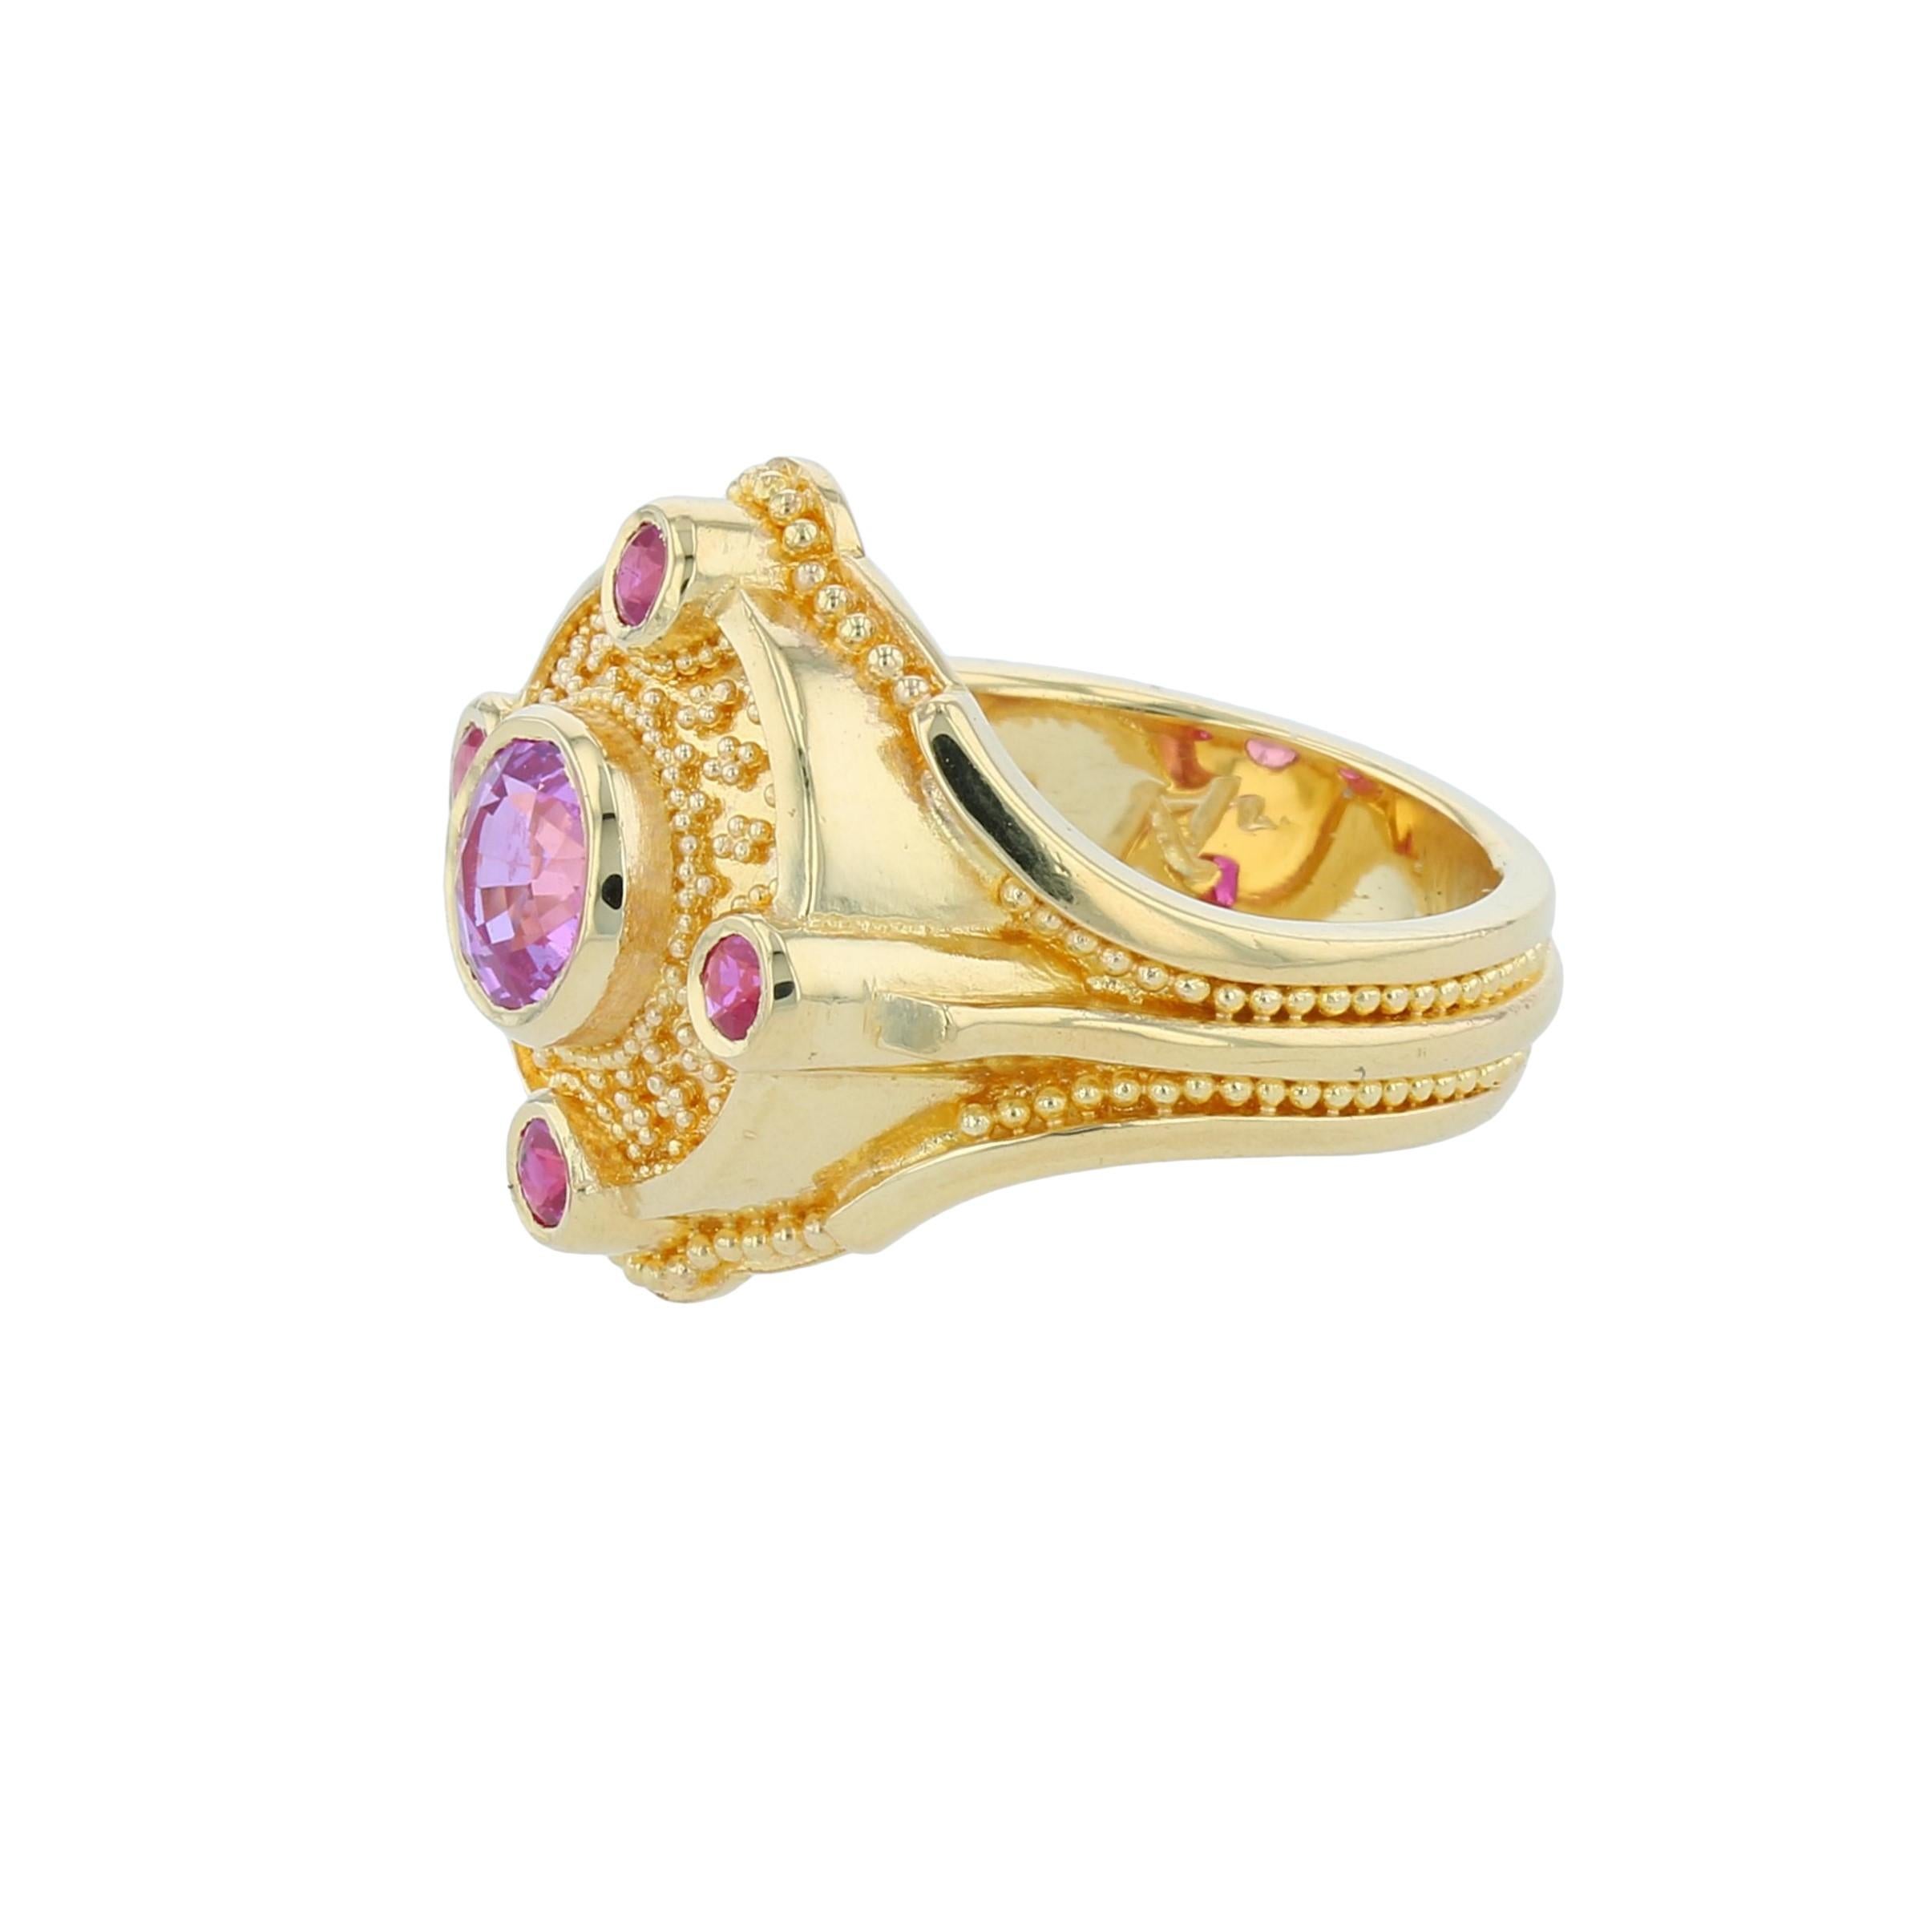 Artisan Kent Raible's 18 Karat Gold Pink Sapphire Cocktail Ring with Fine Granulation